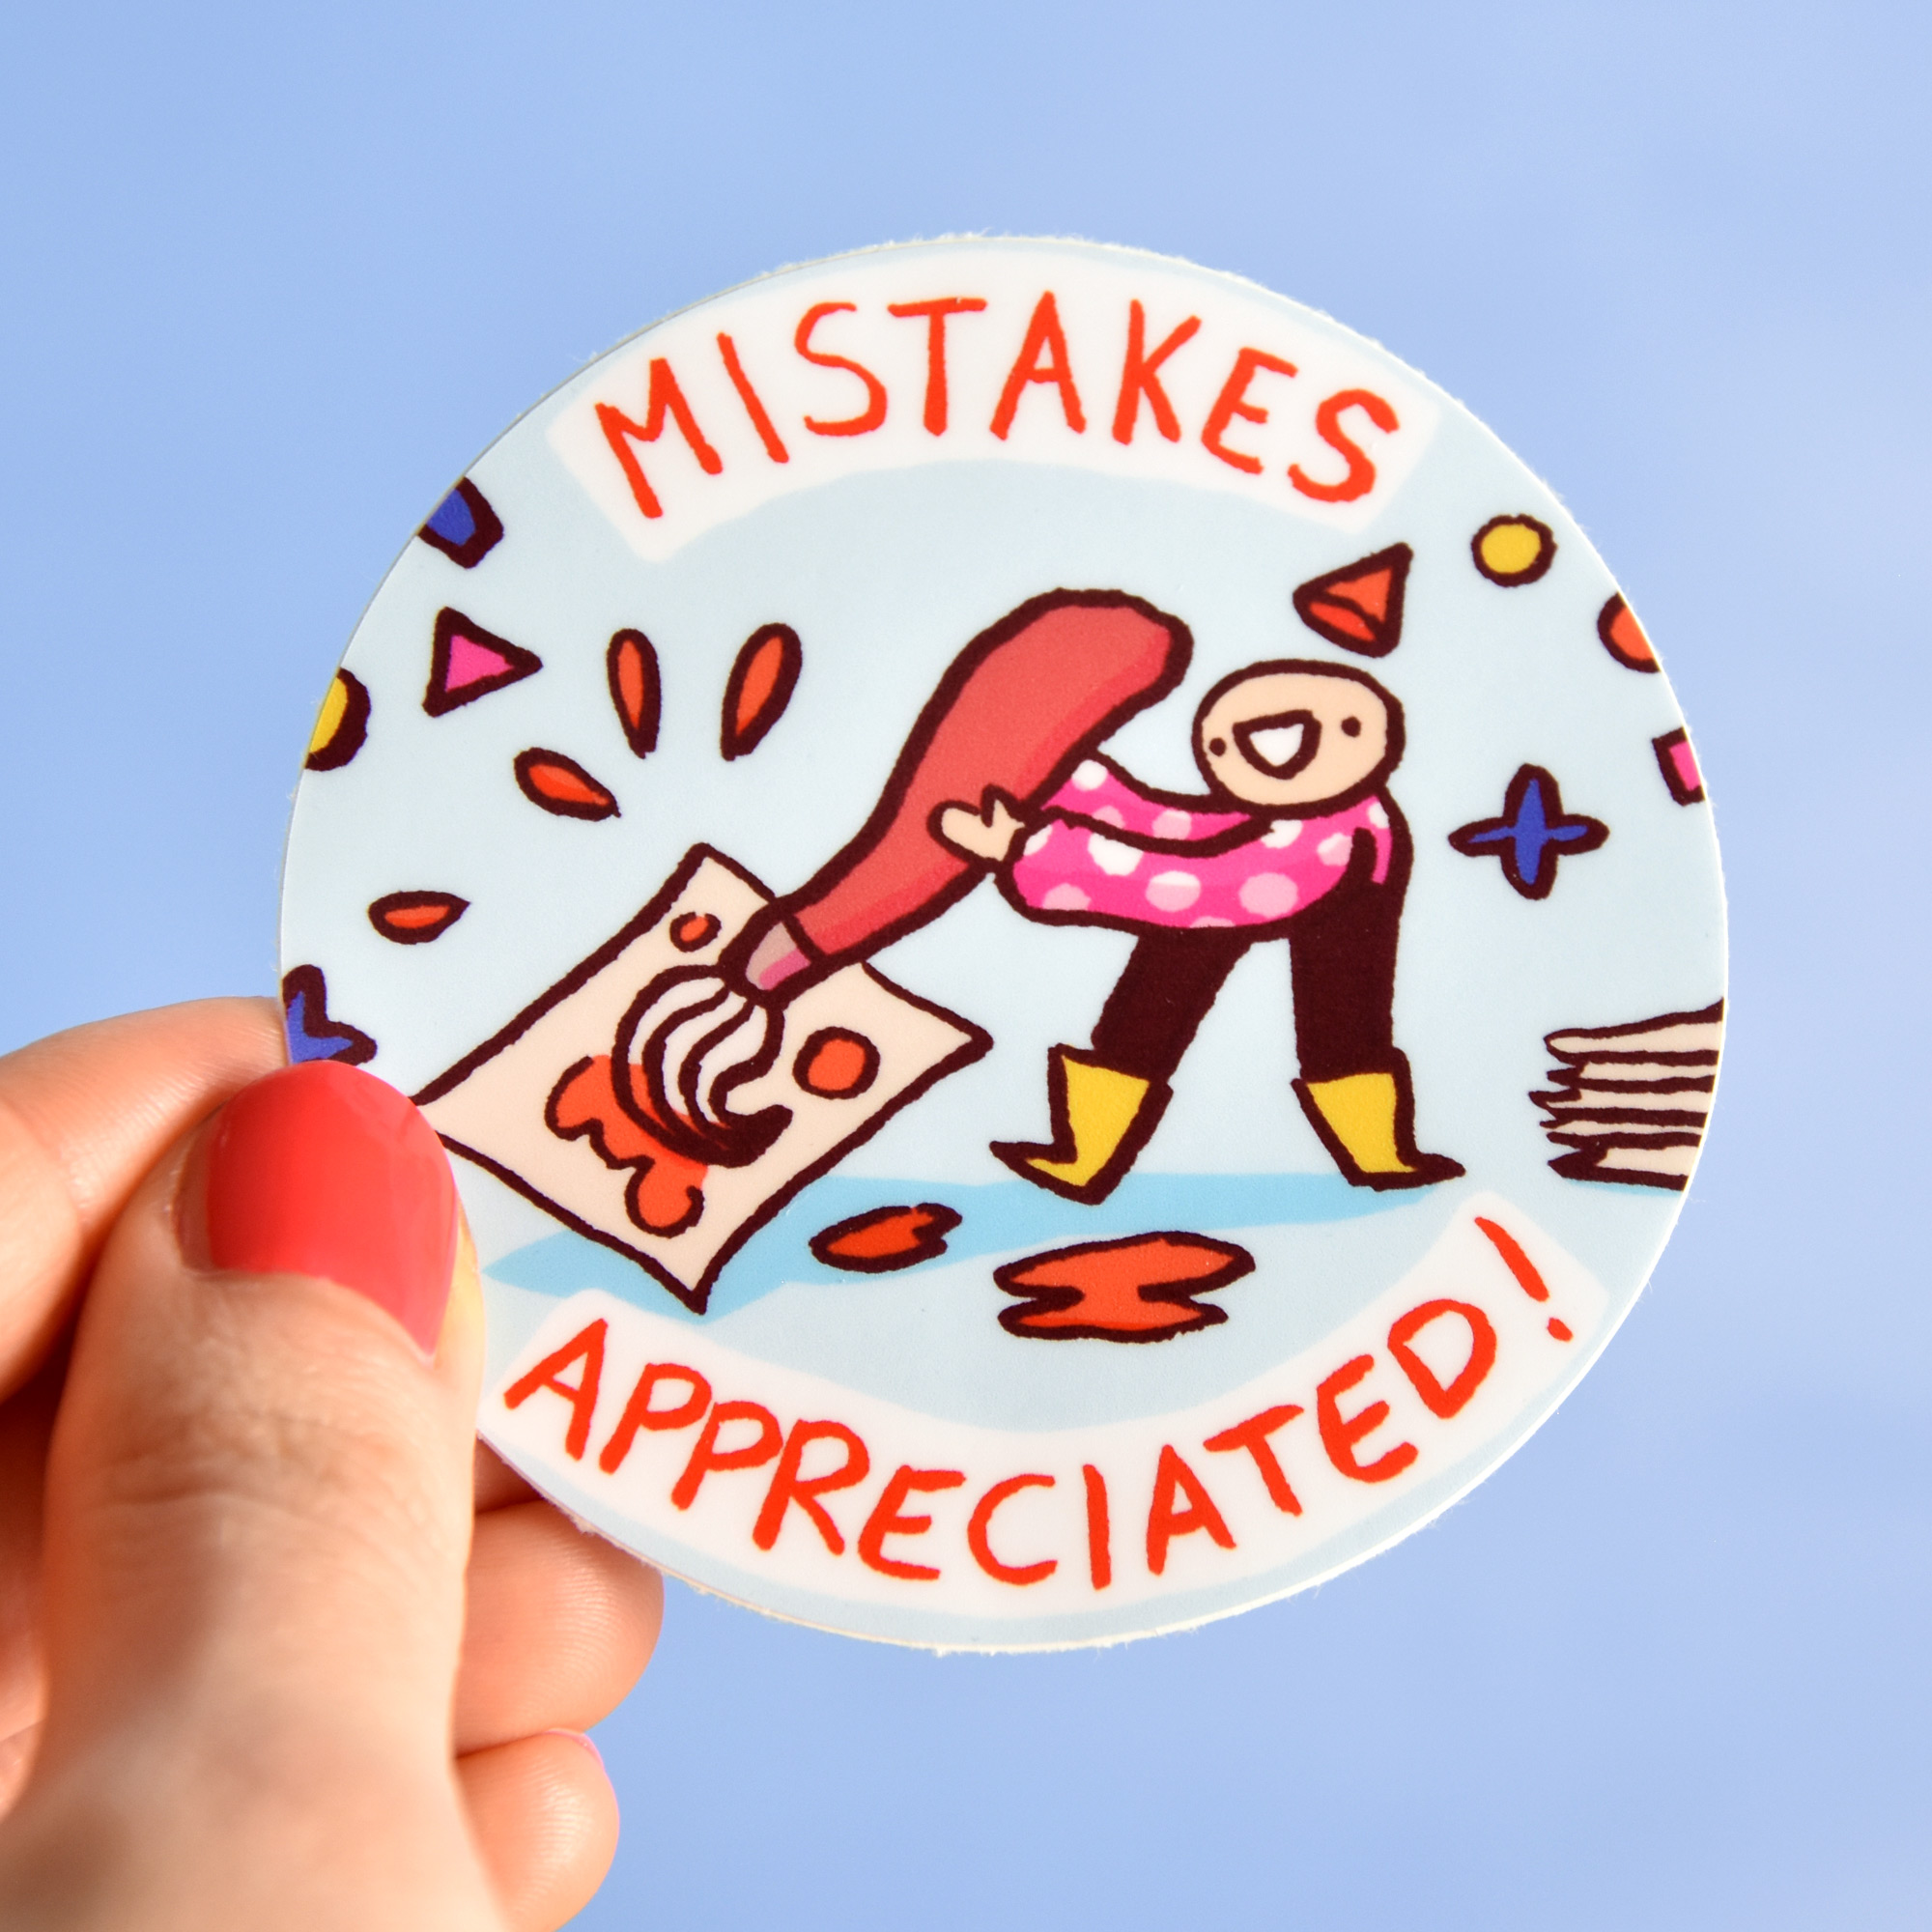 Mistakes appreciated Sticker